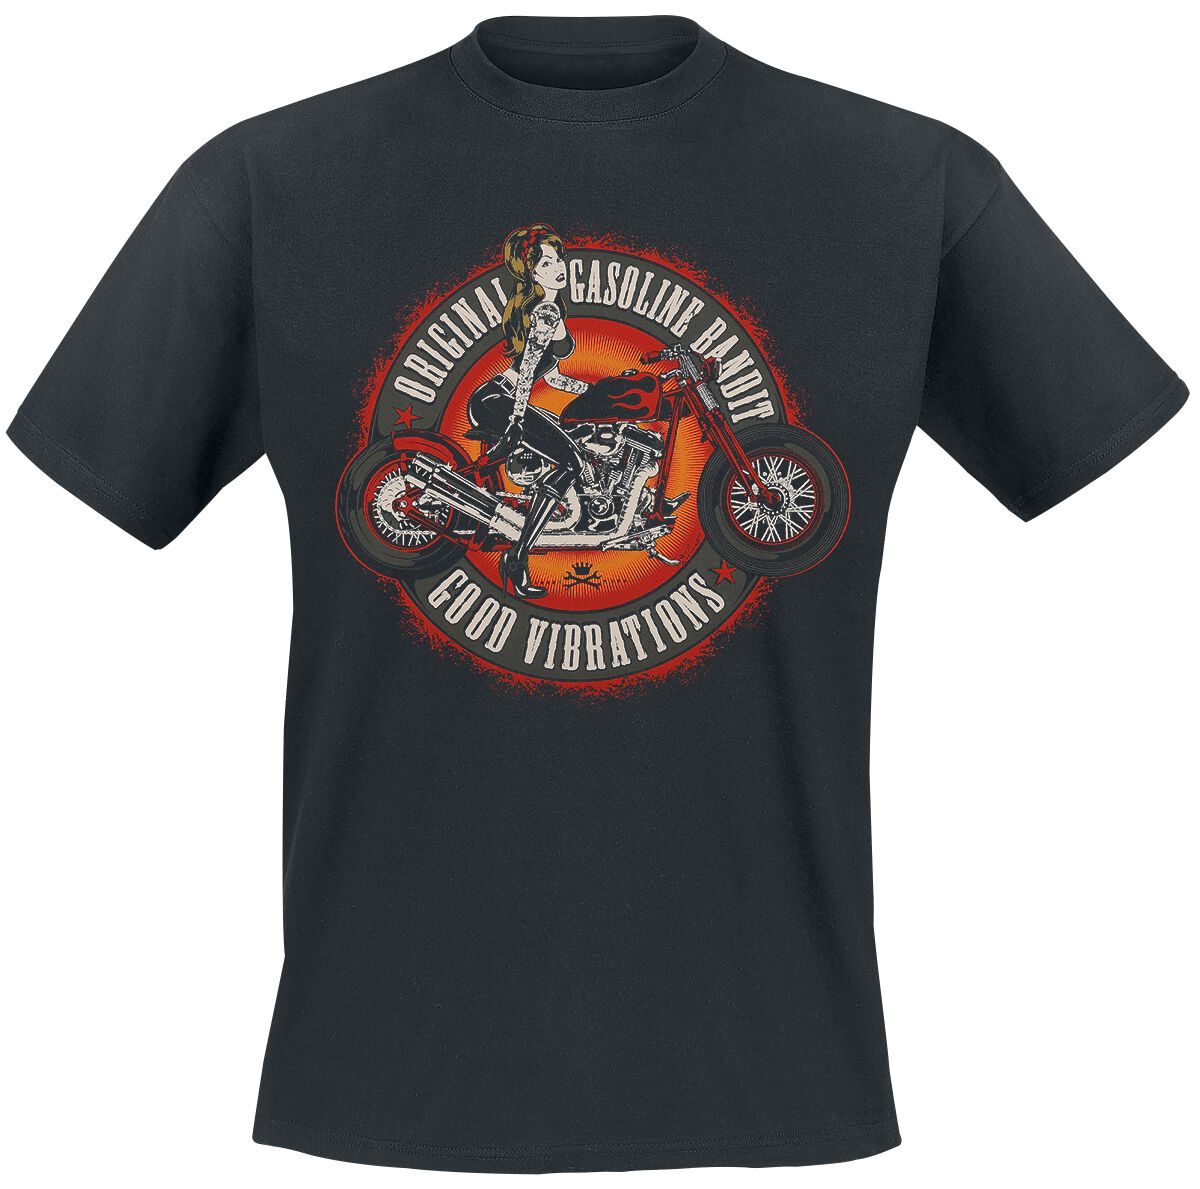 Gasoline Bandit Good Vibrations T-Shirt schwarz in 3XL